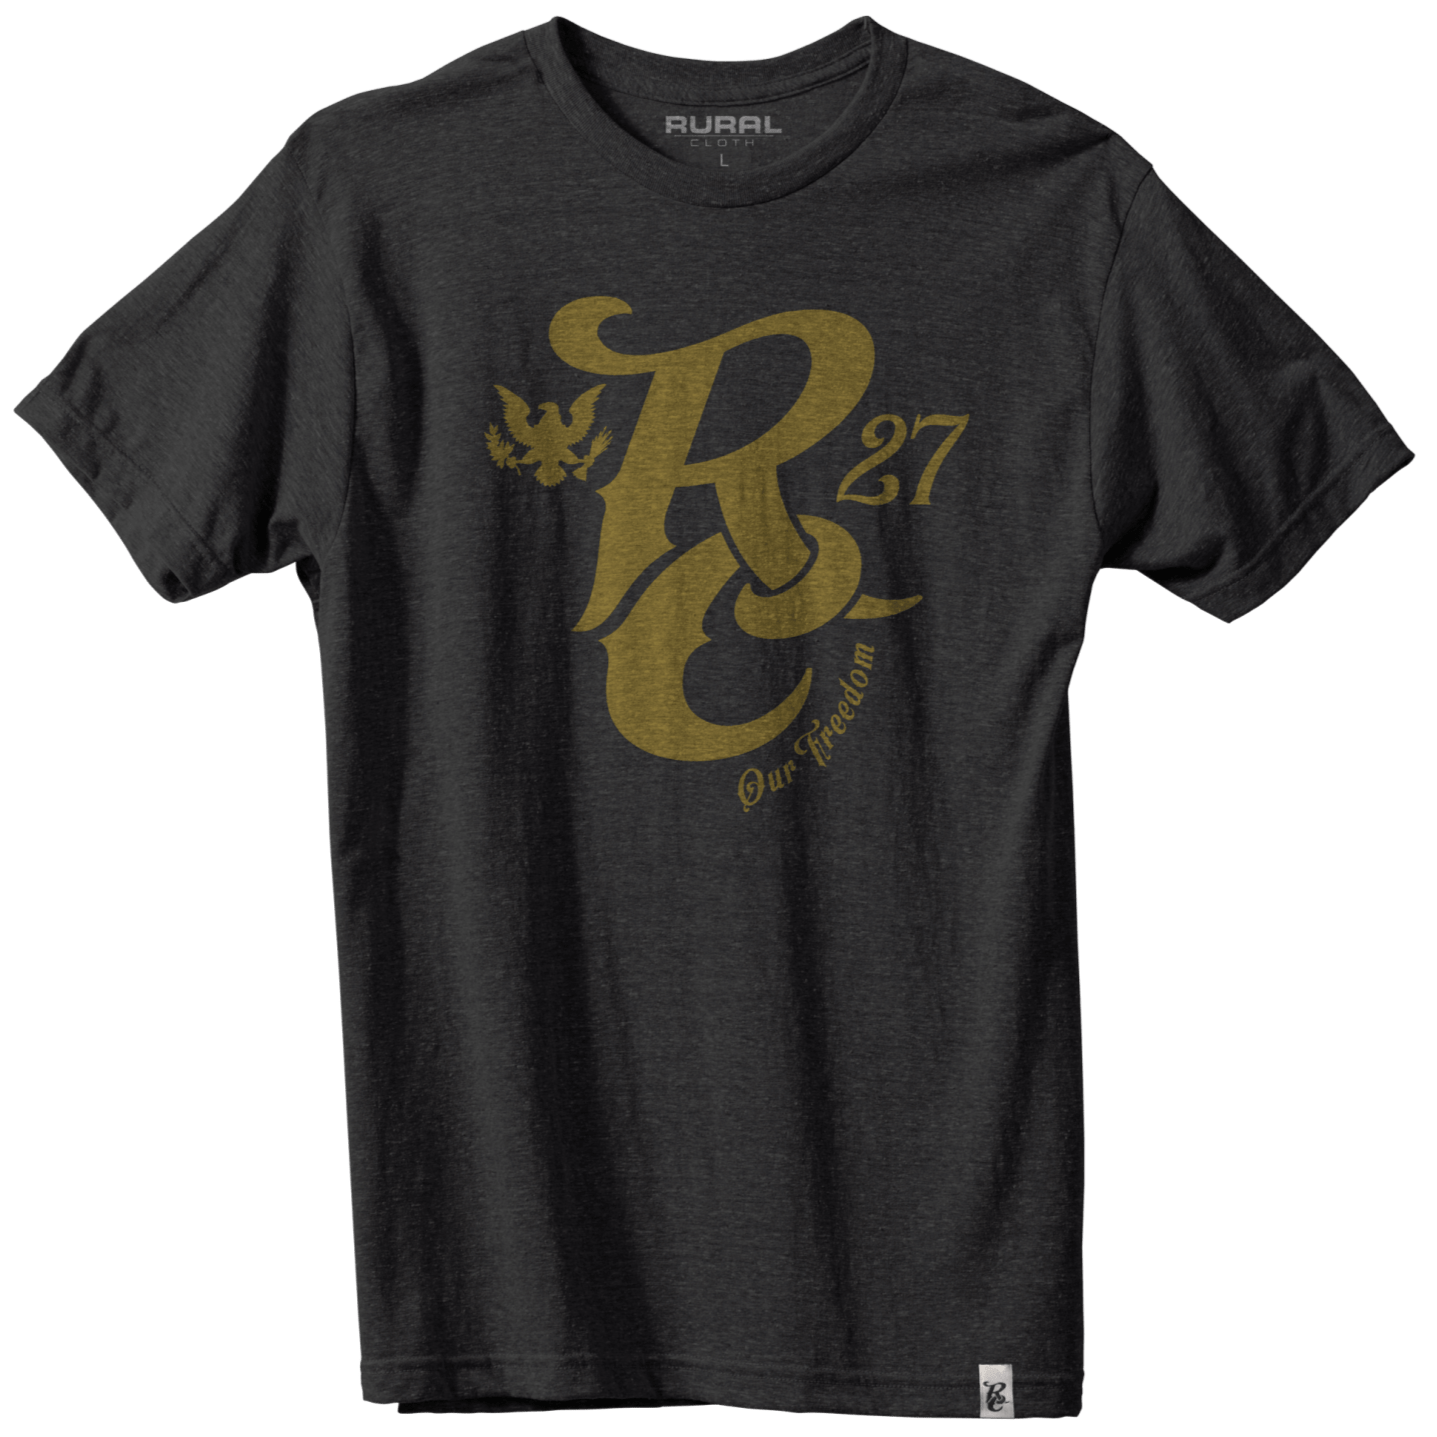 Rural Cloth Shirts R27 Men's Tee - Black with gold logo